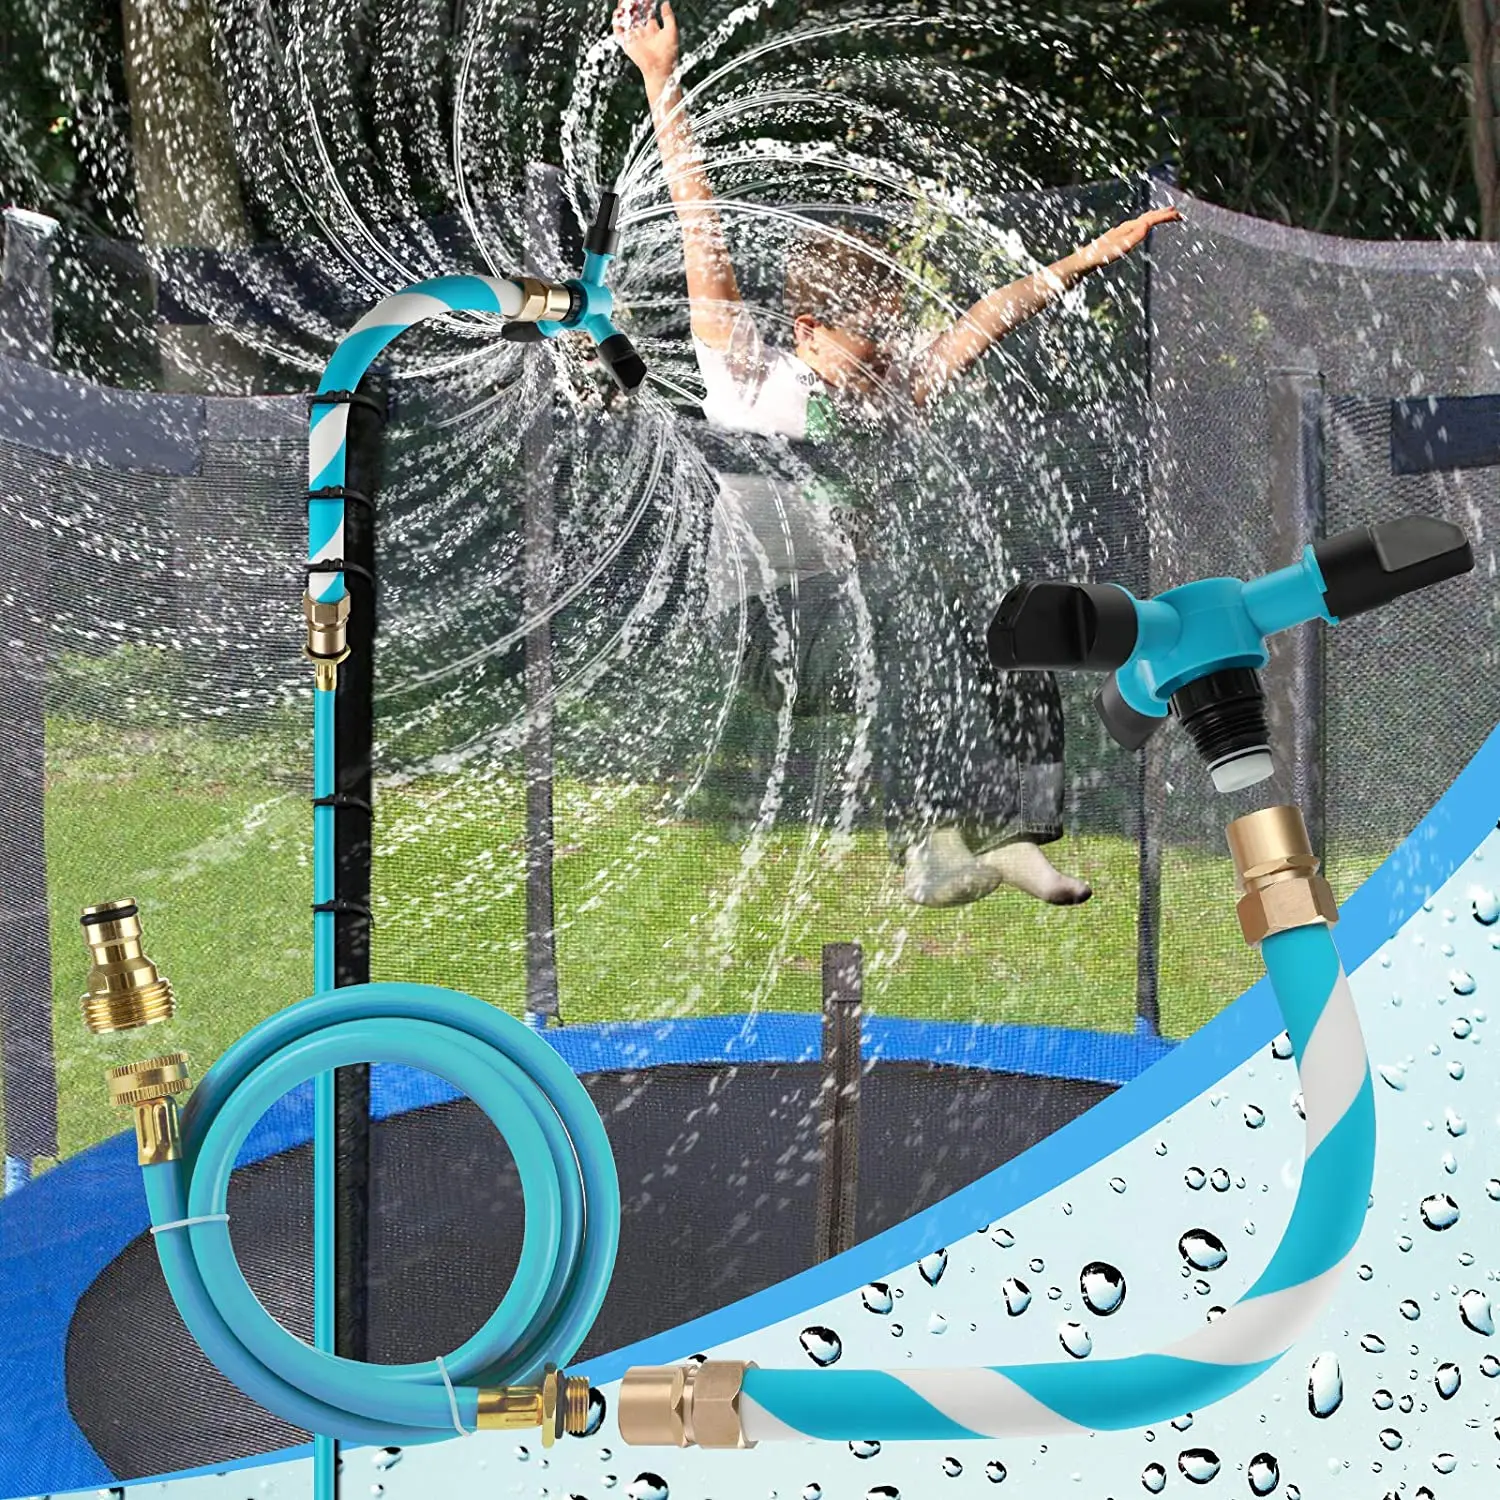 

Trampoline water sprinkler Summer Water Sprinkler Outdoor Garden Water Games Toy Sprayer Backyard Water Park Fun For Kids